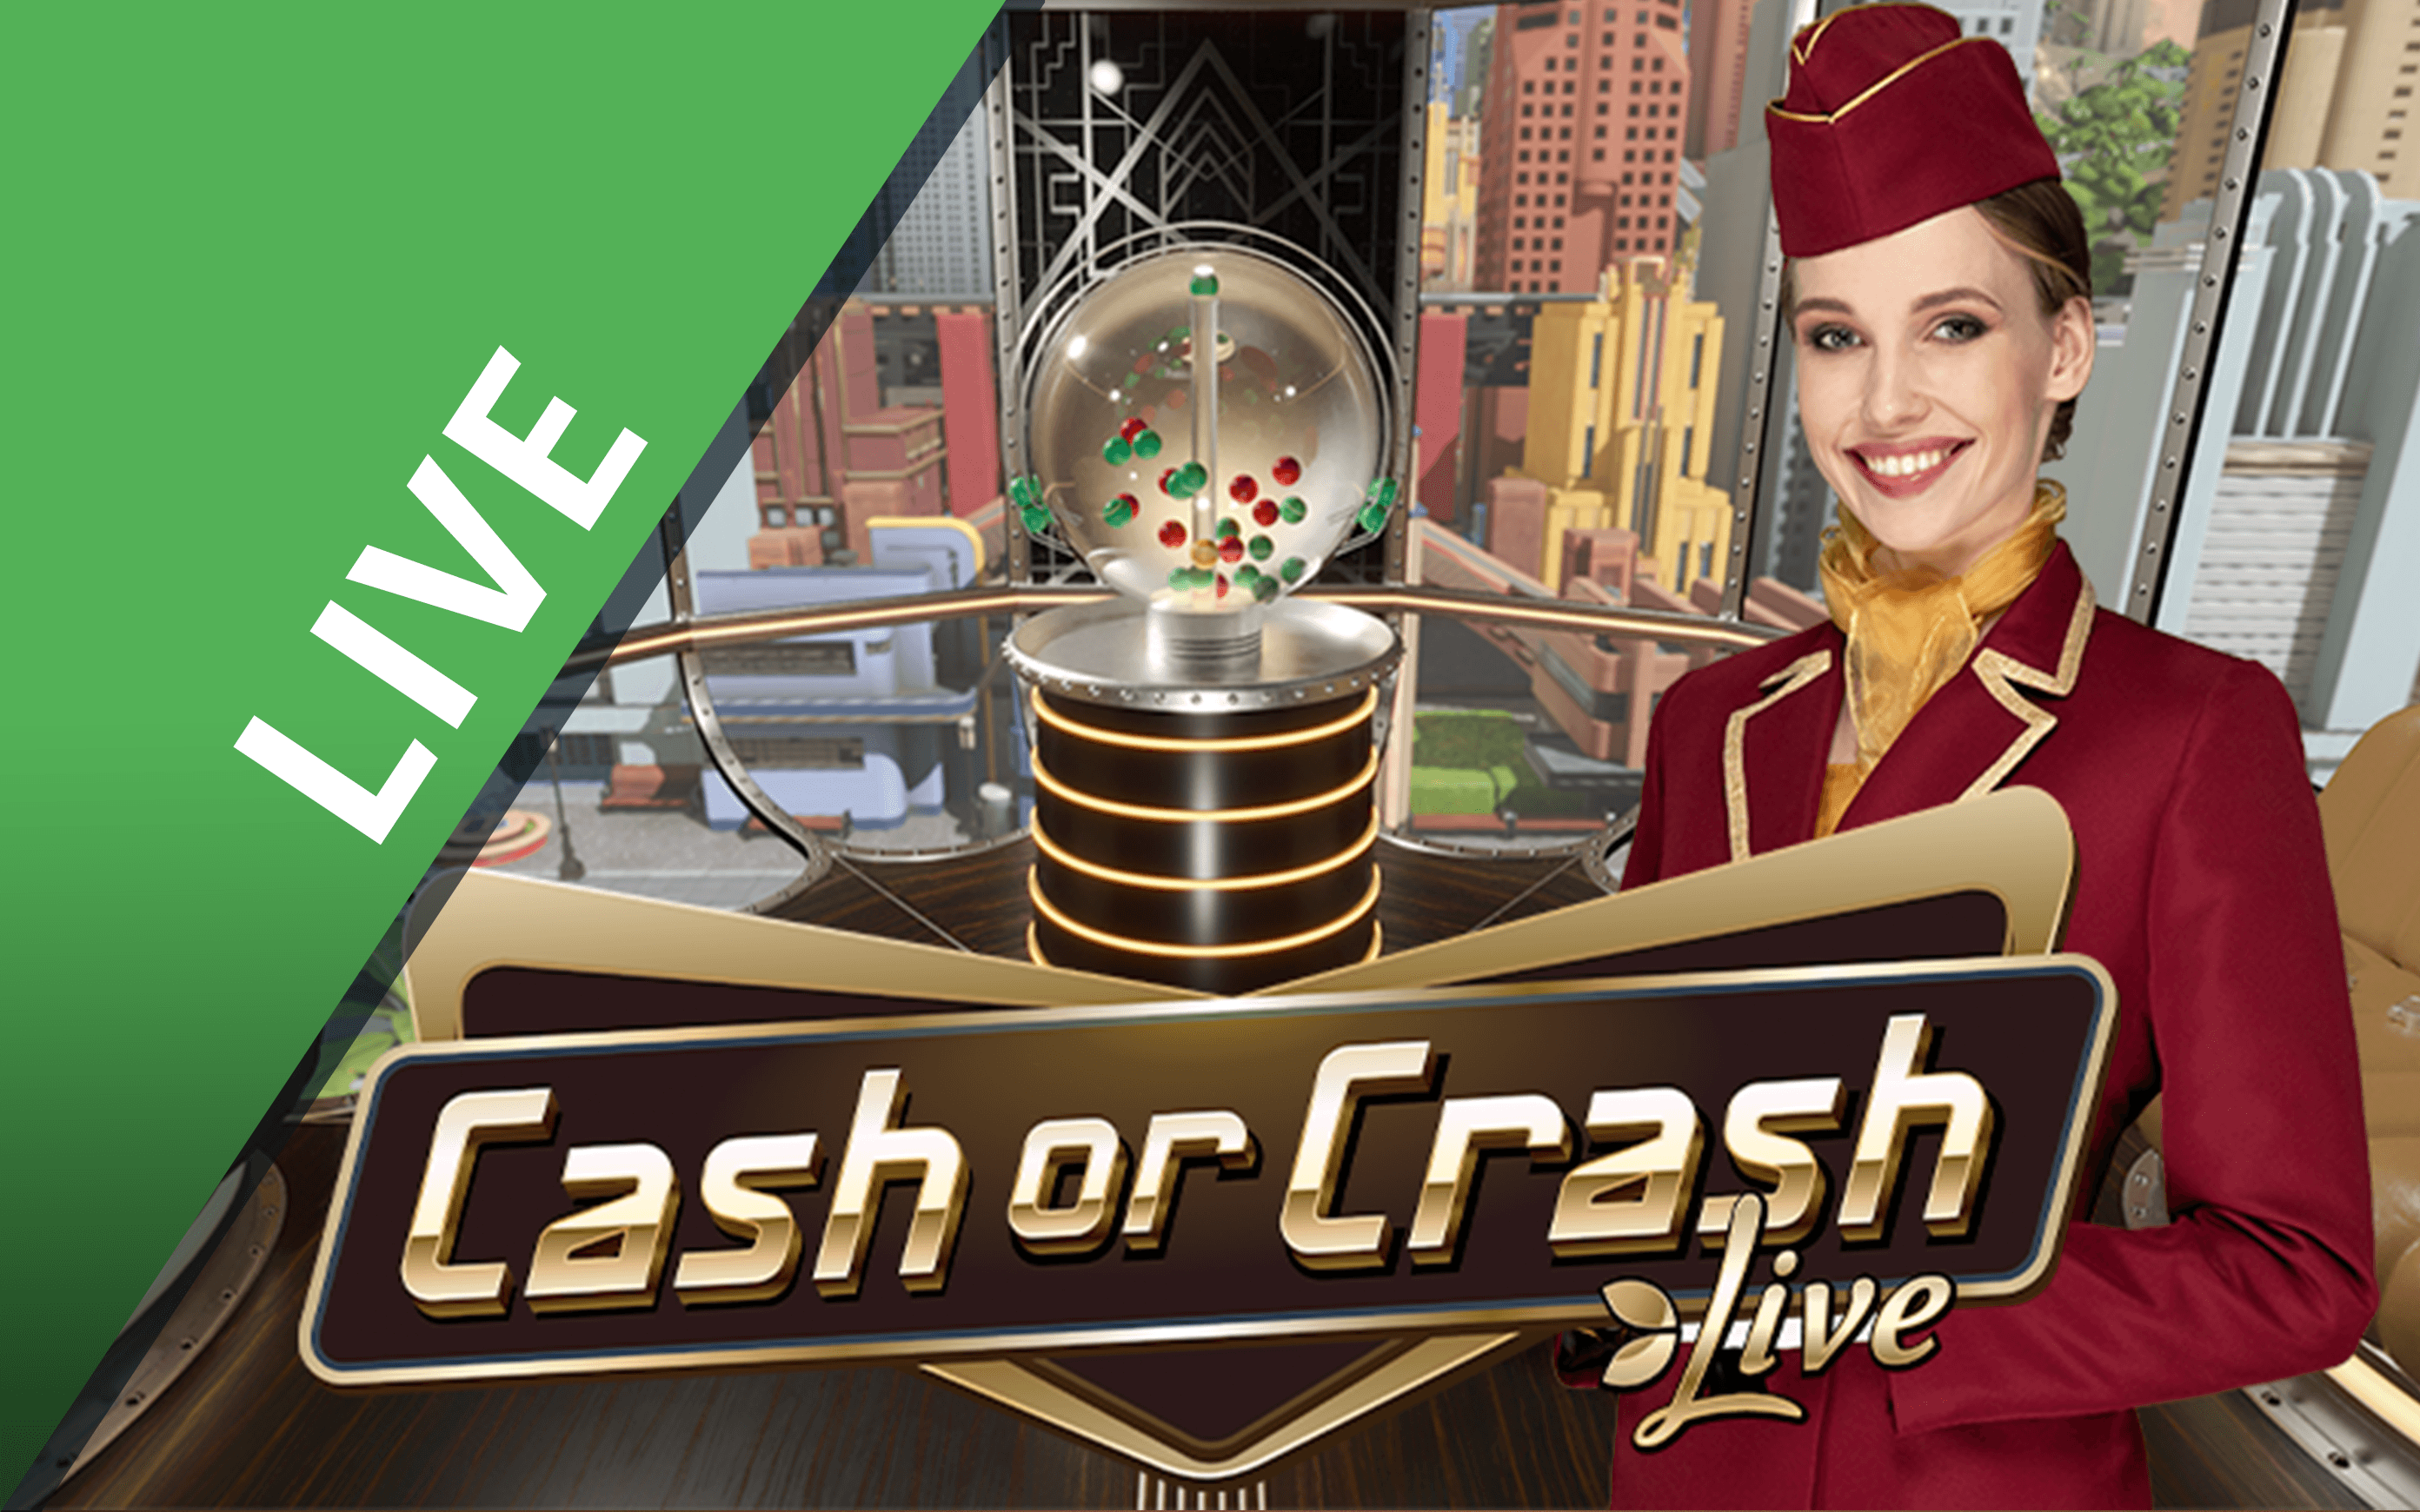 Грайте у Cash or Crash в онлайн-казино Starcasino.be